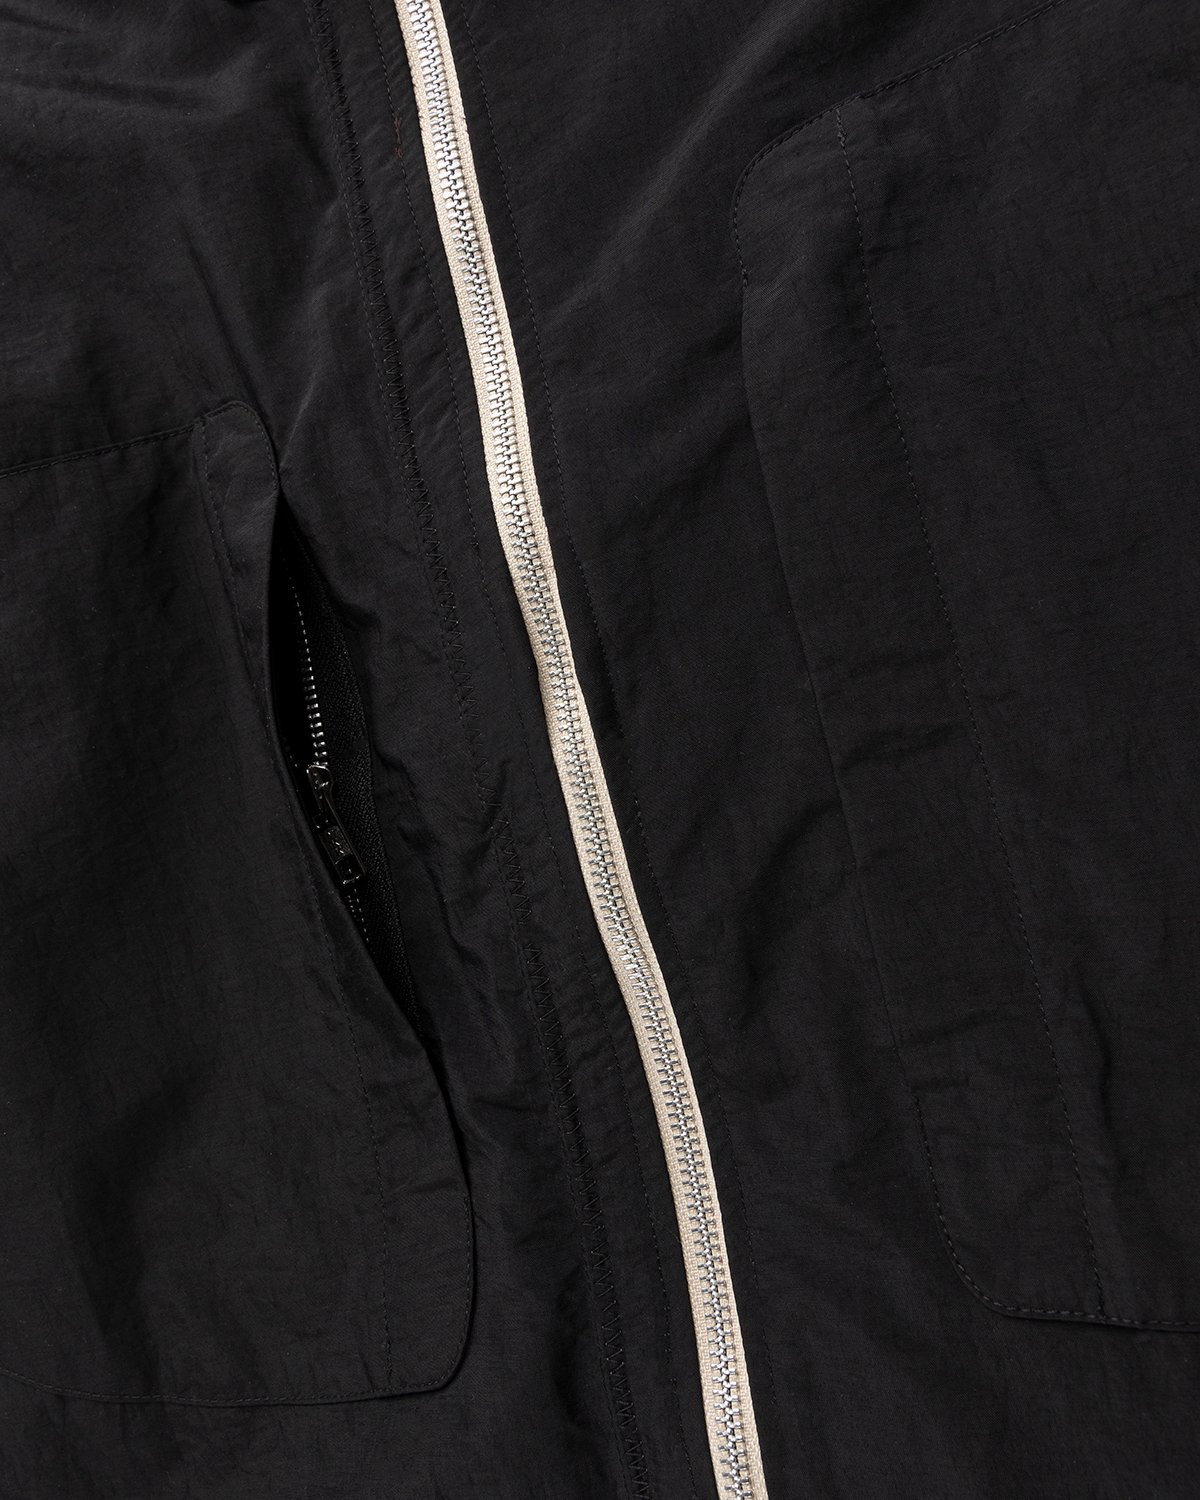 Arnar Mar Jonsson - Texlon Composition Outerwear Jacket Beige Chocolate Black - Clothing - Black - Image 8